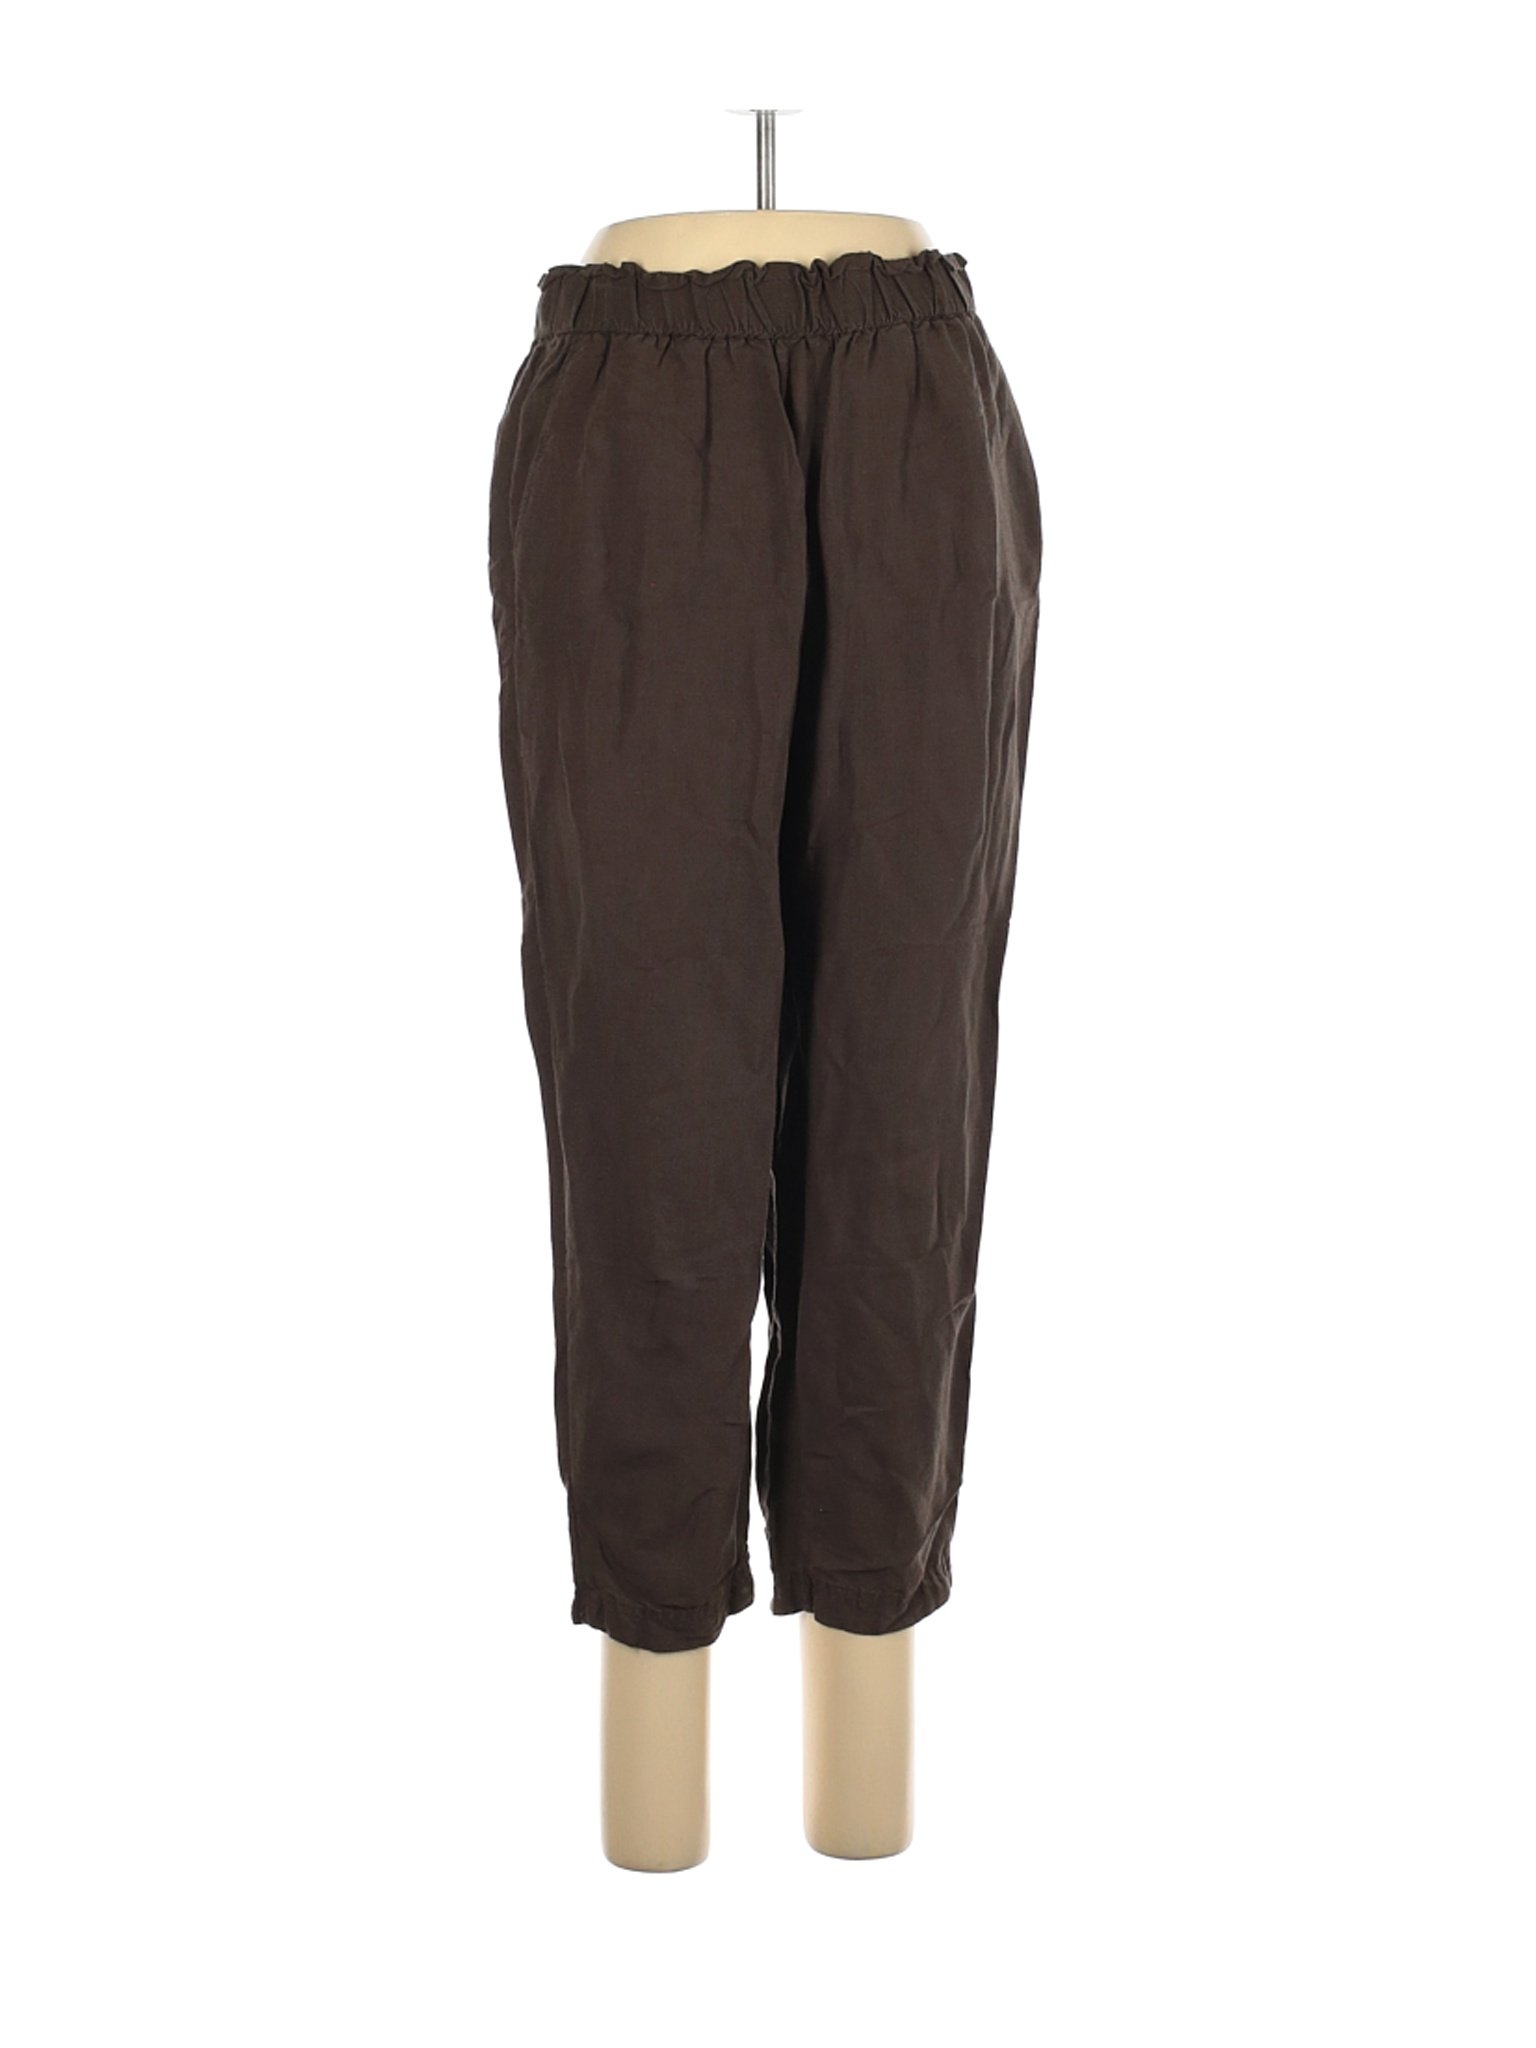 H&M Women Brown Linen Pants 10 | eBay